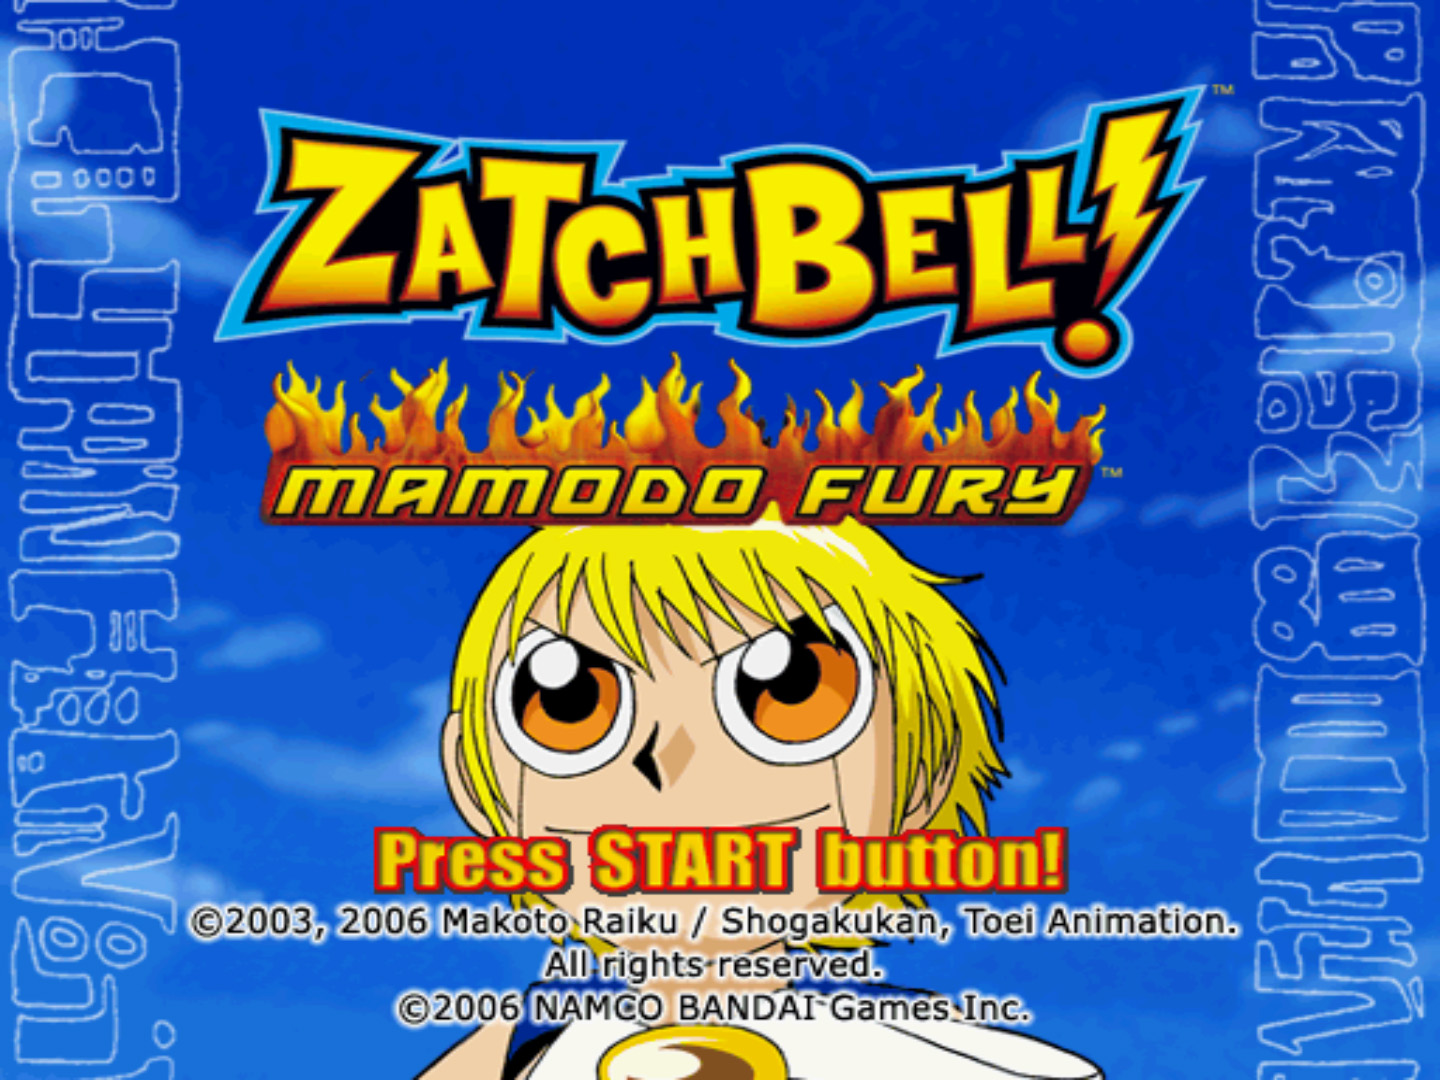 zatch-bell-mamodo-fury-details-launchbox-games-database